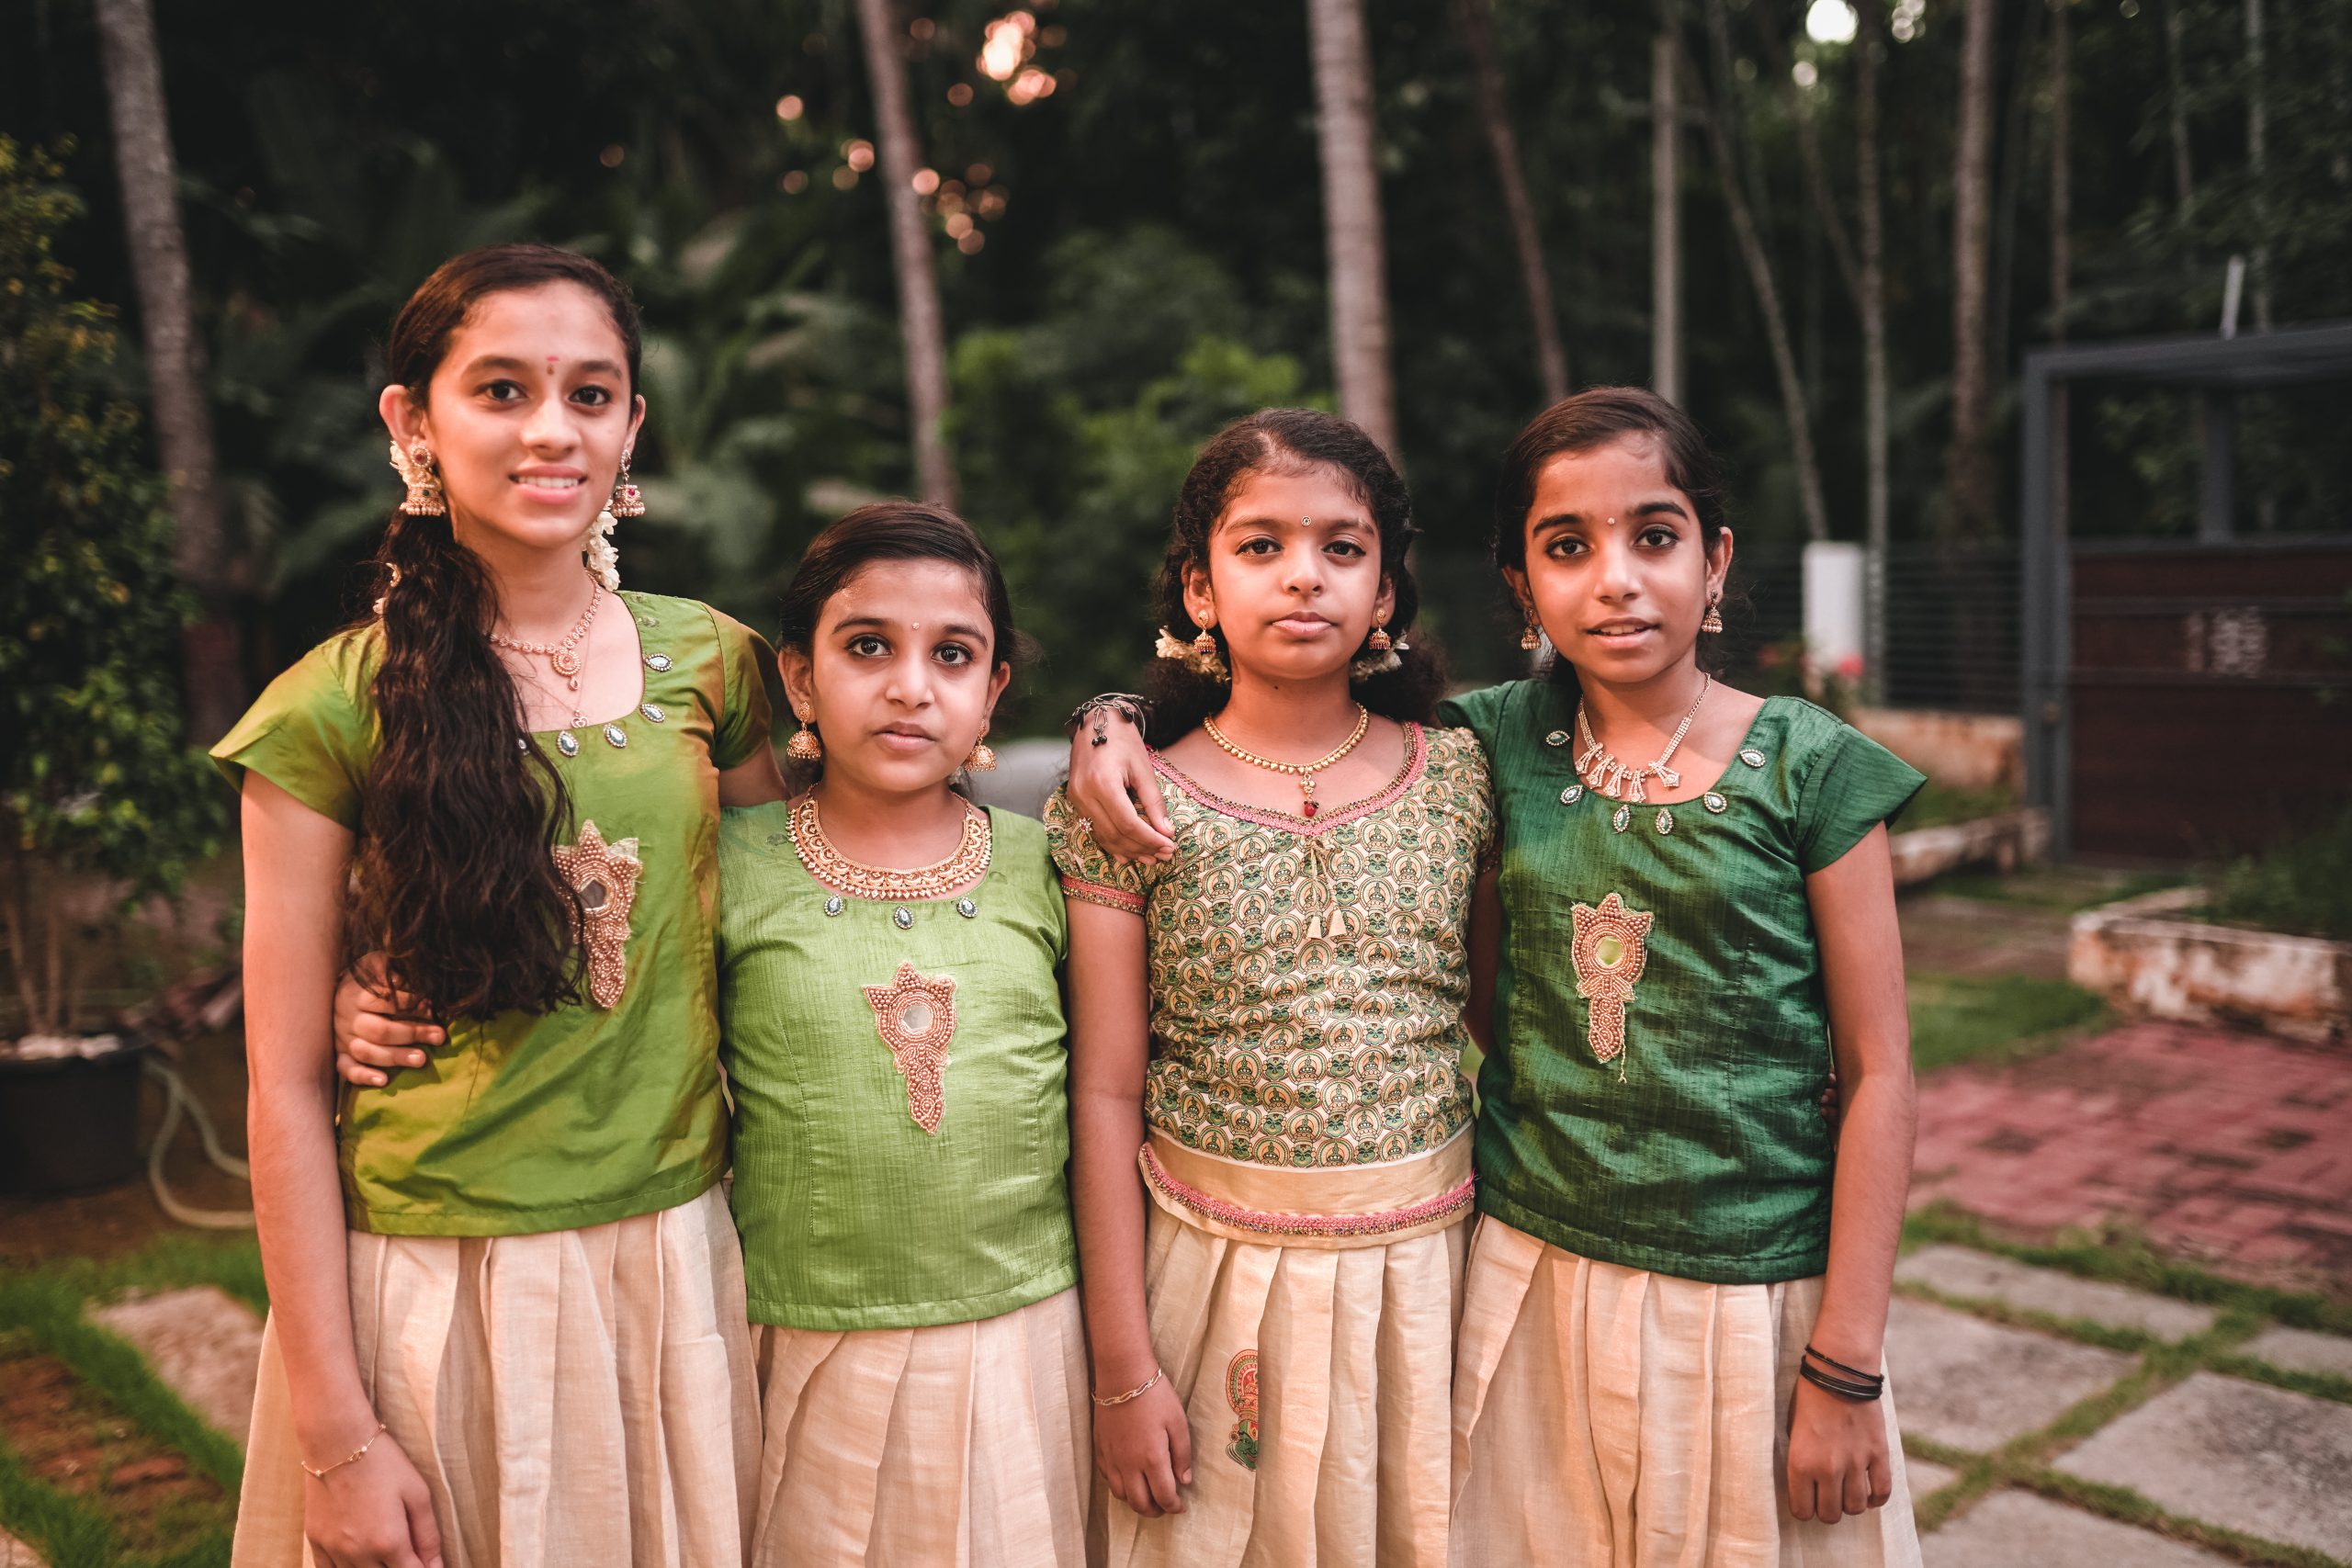 Girls celebrating an Indian festival